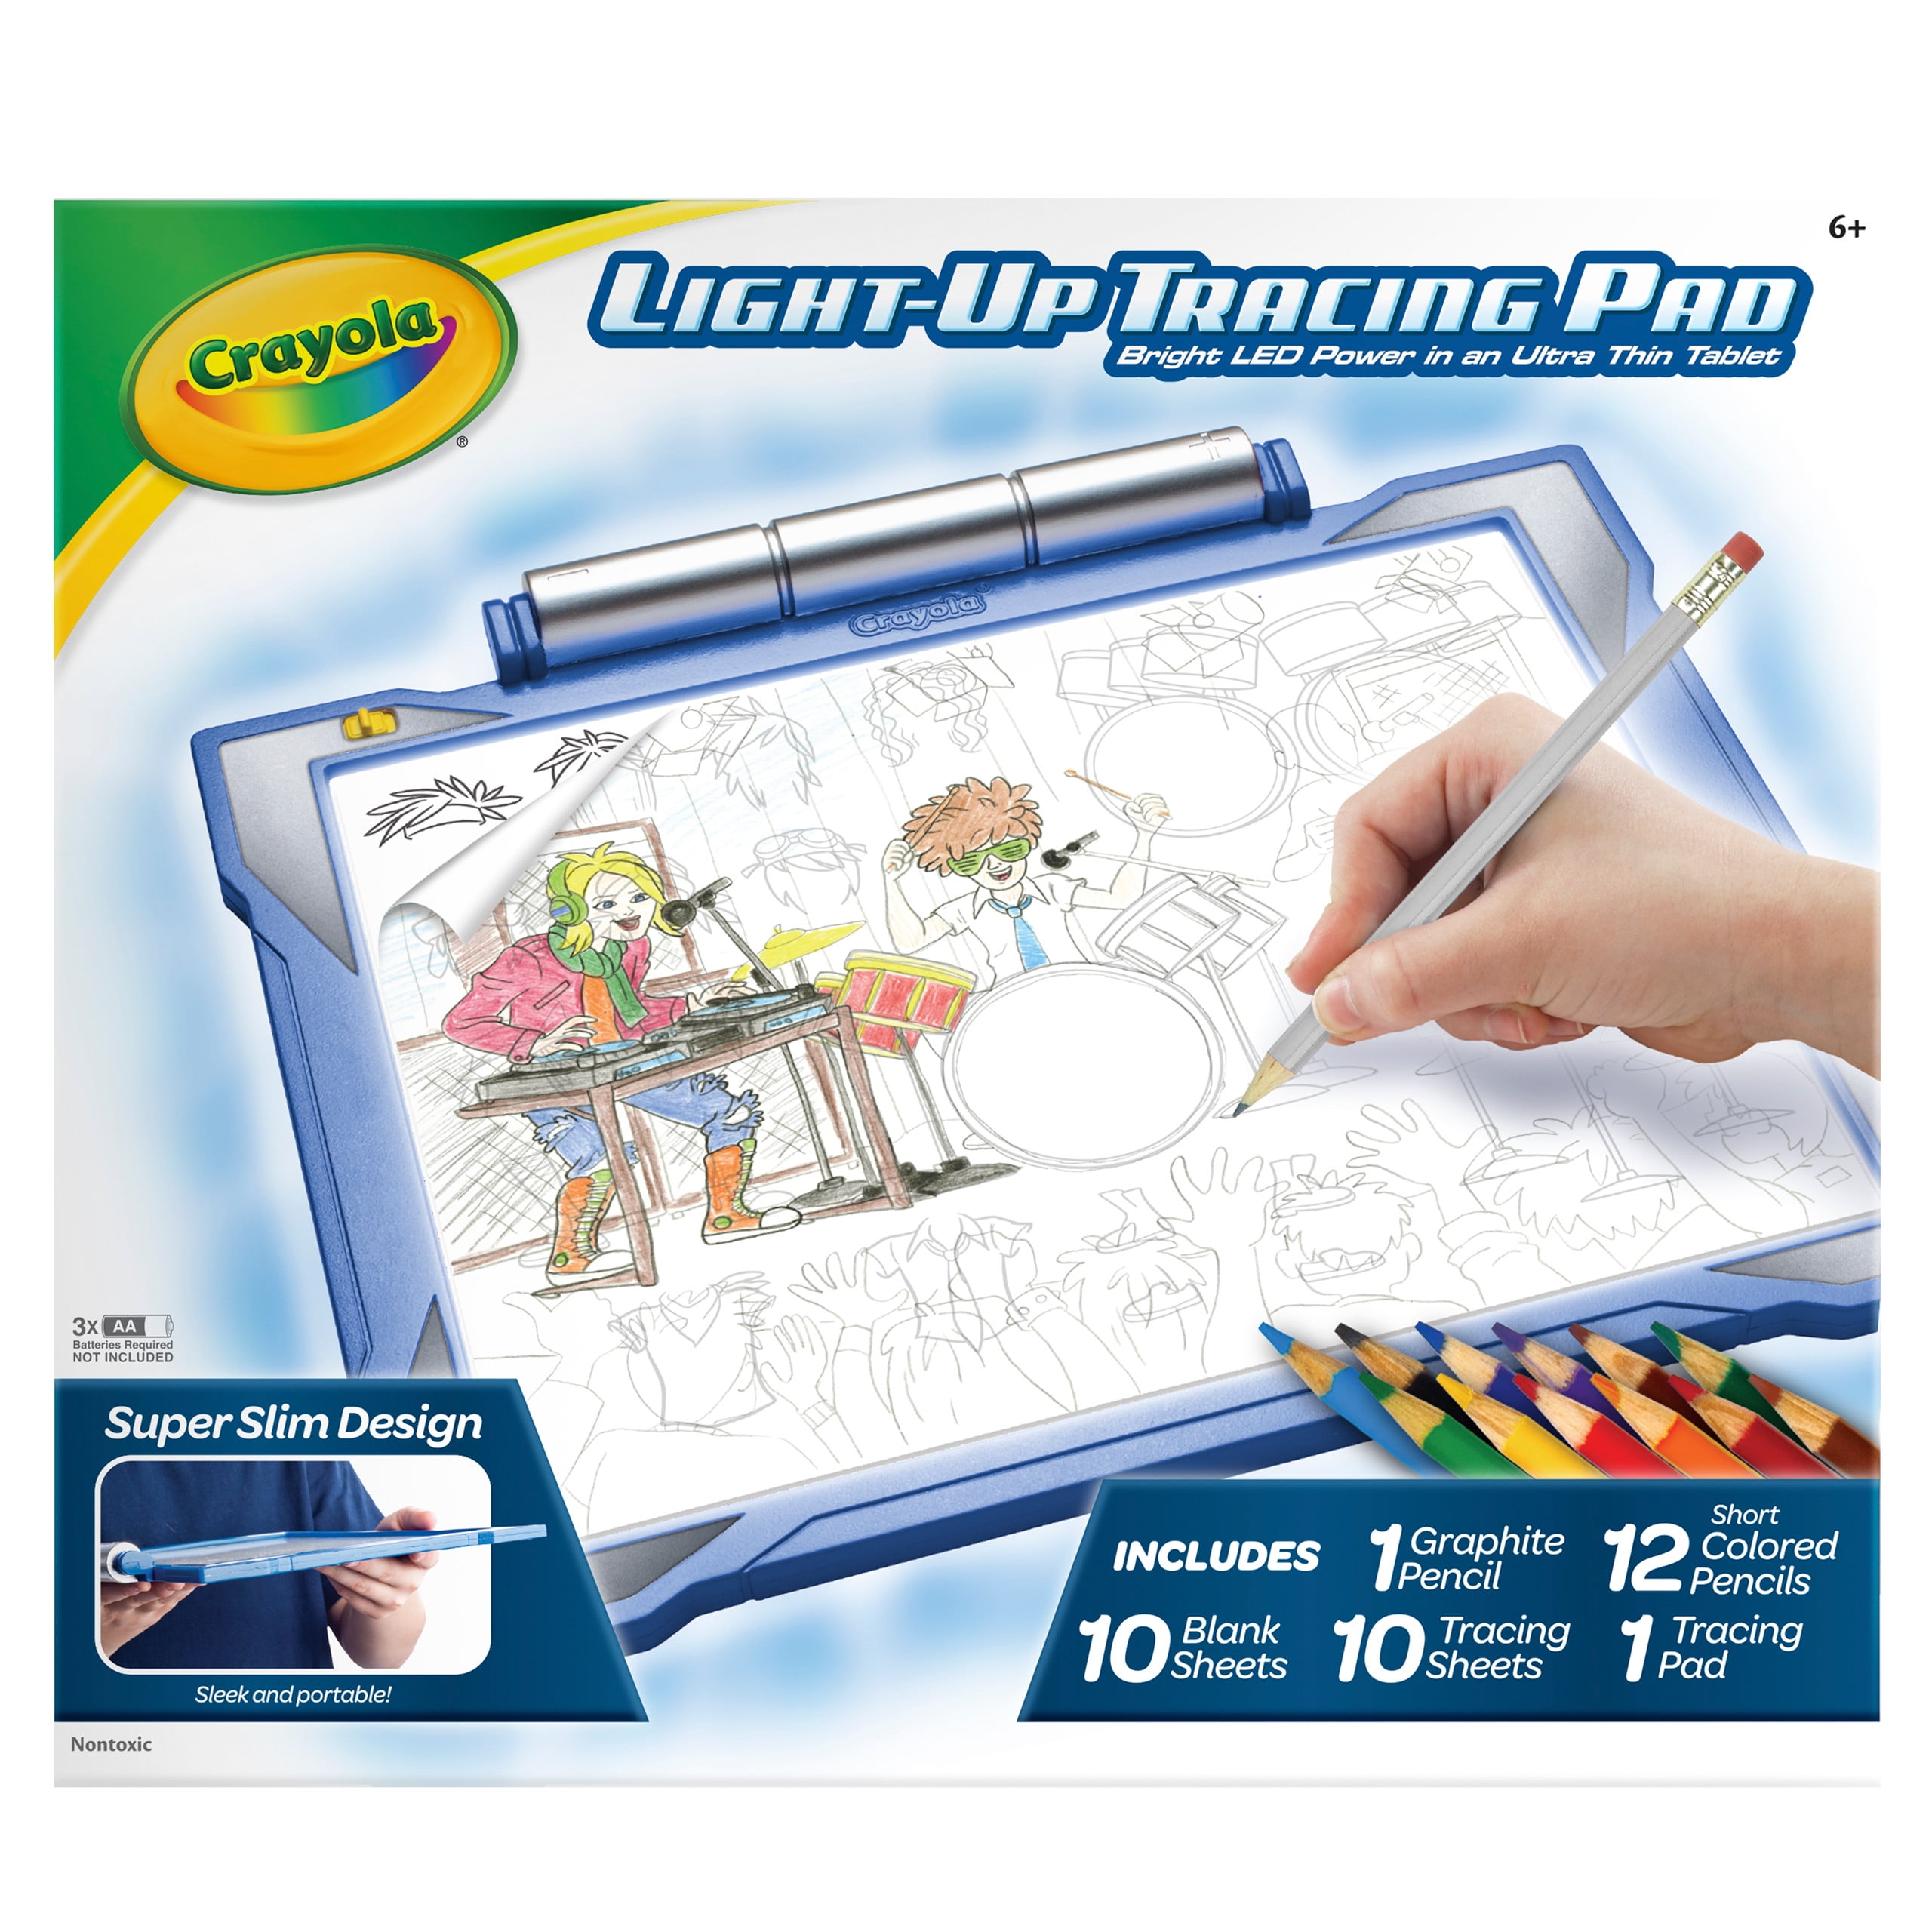 Crayola Ultimate Light Board Drawing Tablet Coloring Set, Light-Up Toys for  Kids, Beginner Child 